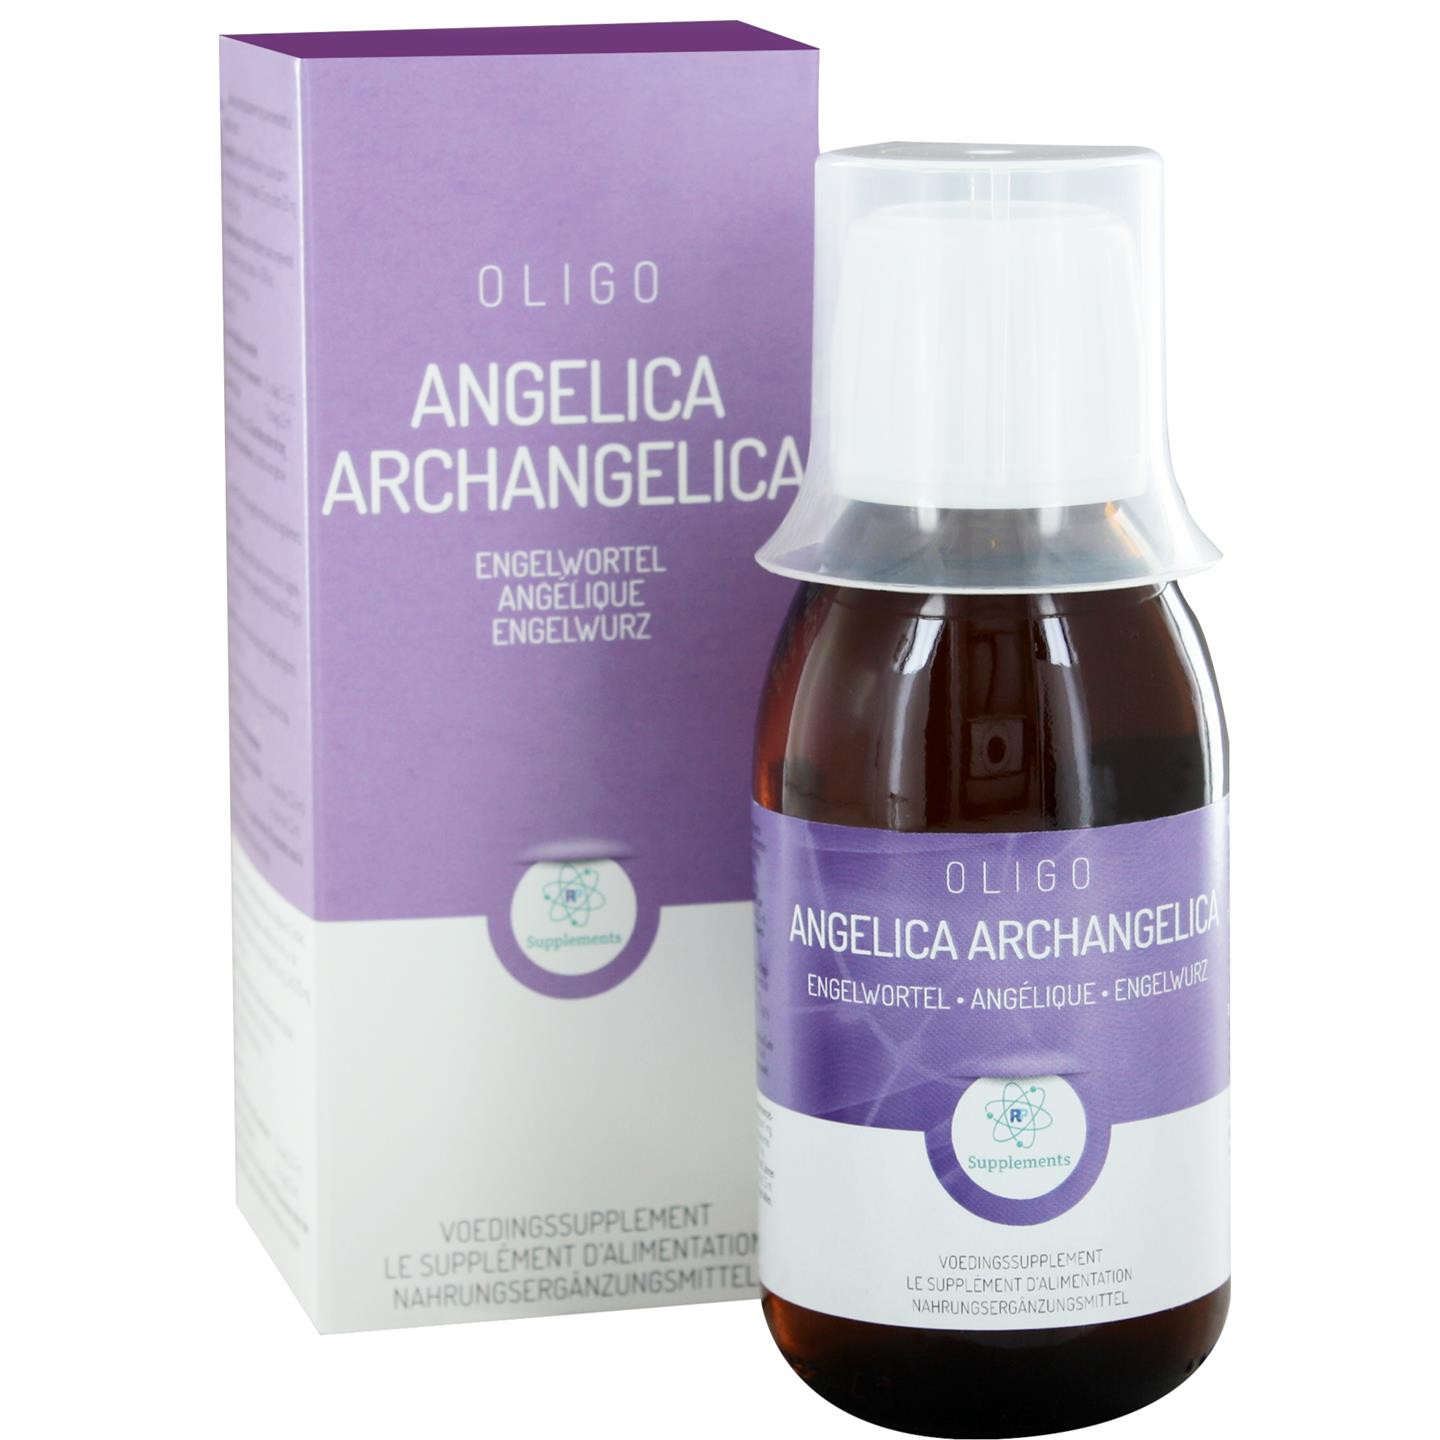 Oligo Angelica archangelica